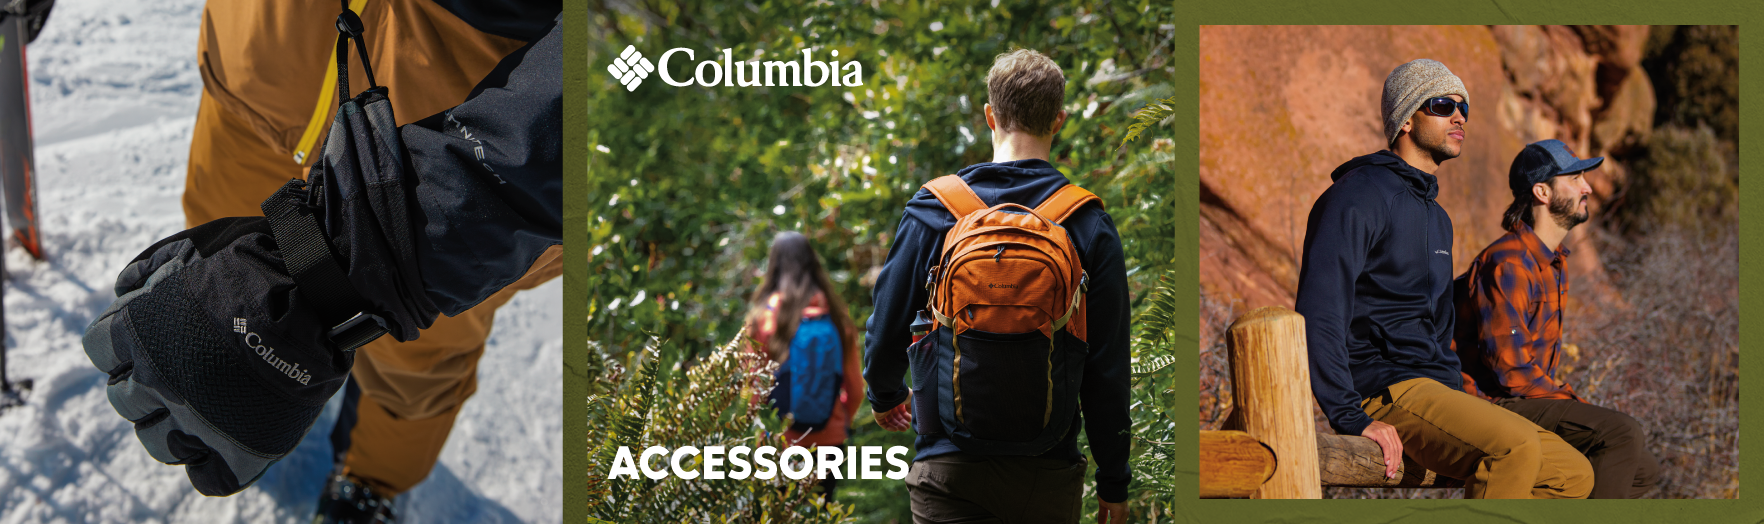 Columbia, Accessories